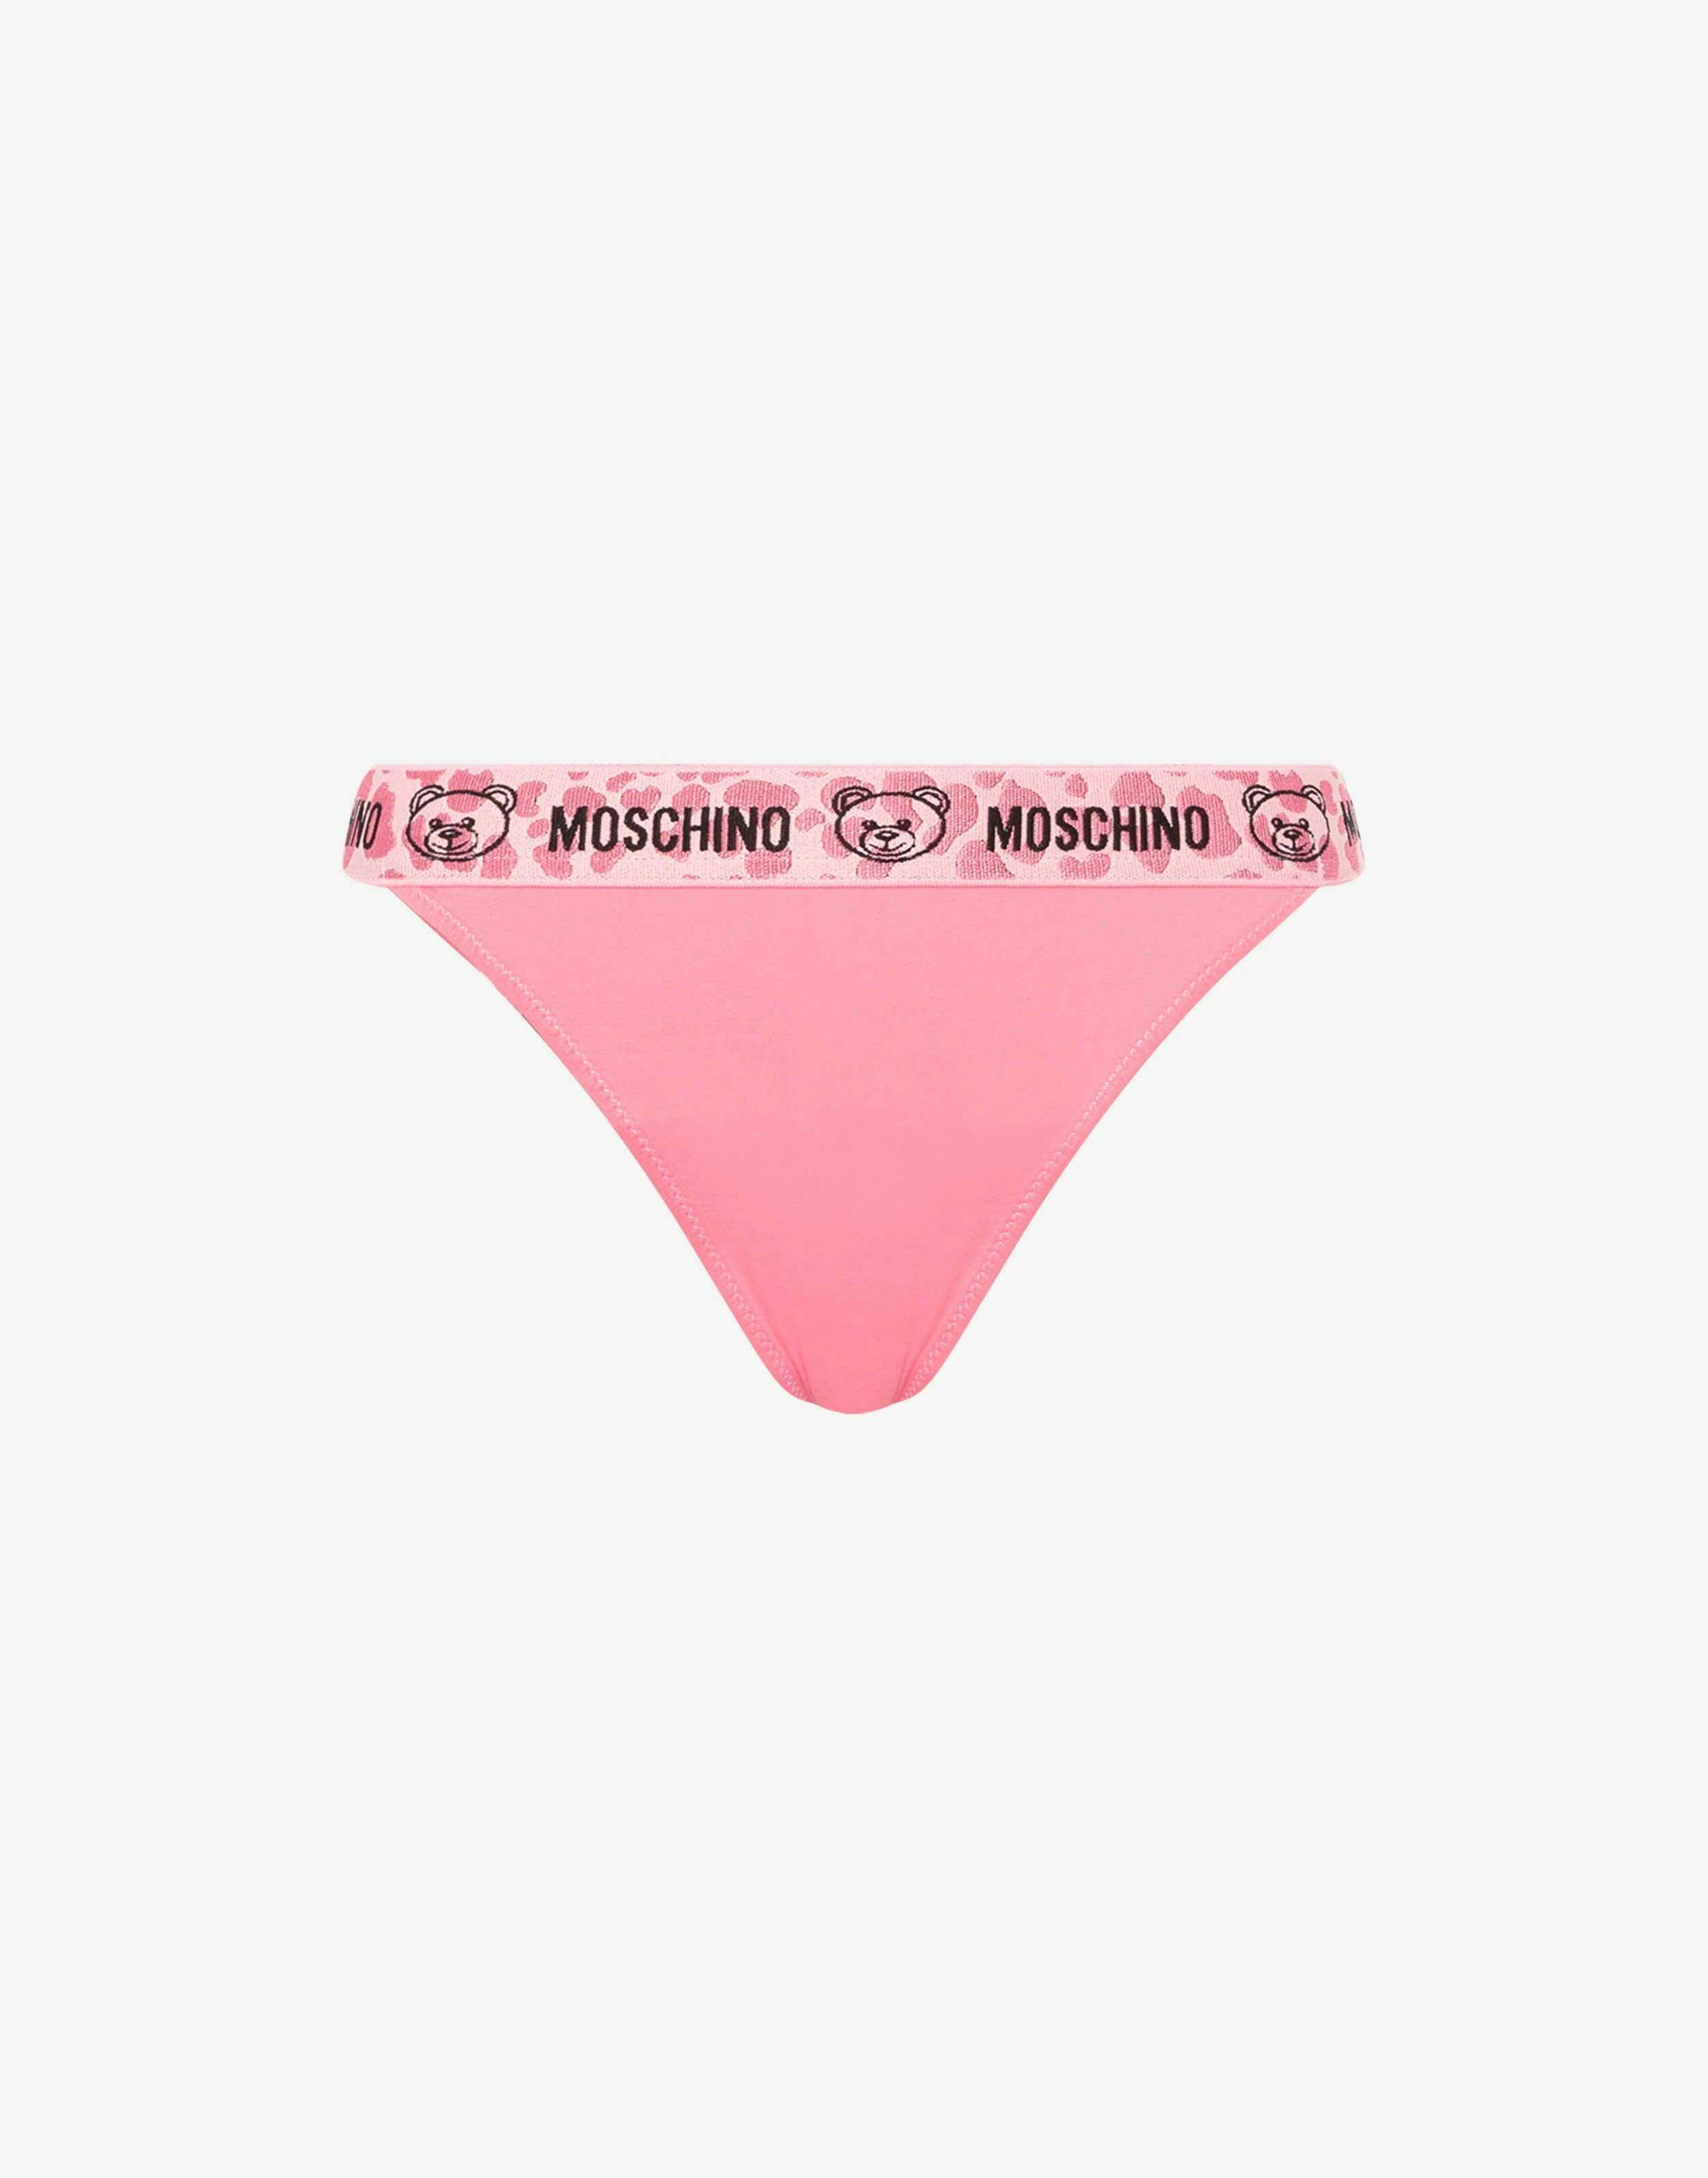 Moschino Underwear - Women Clothing | Moschino Official Store